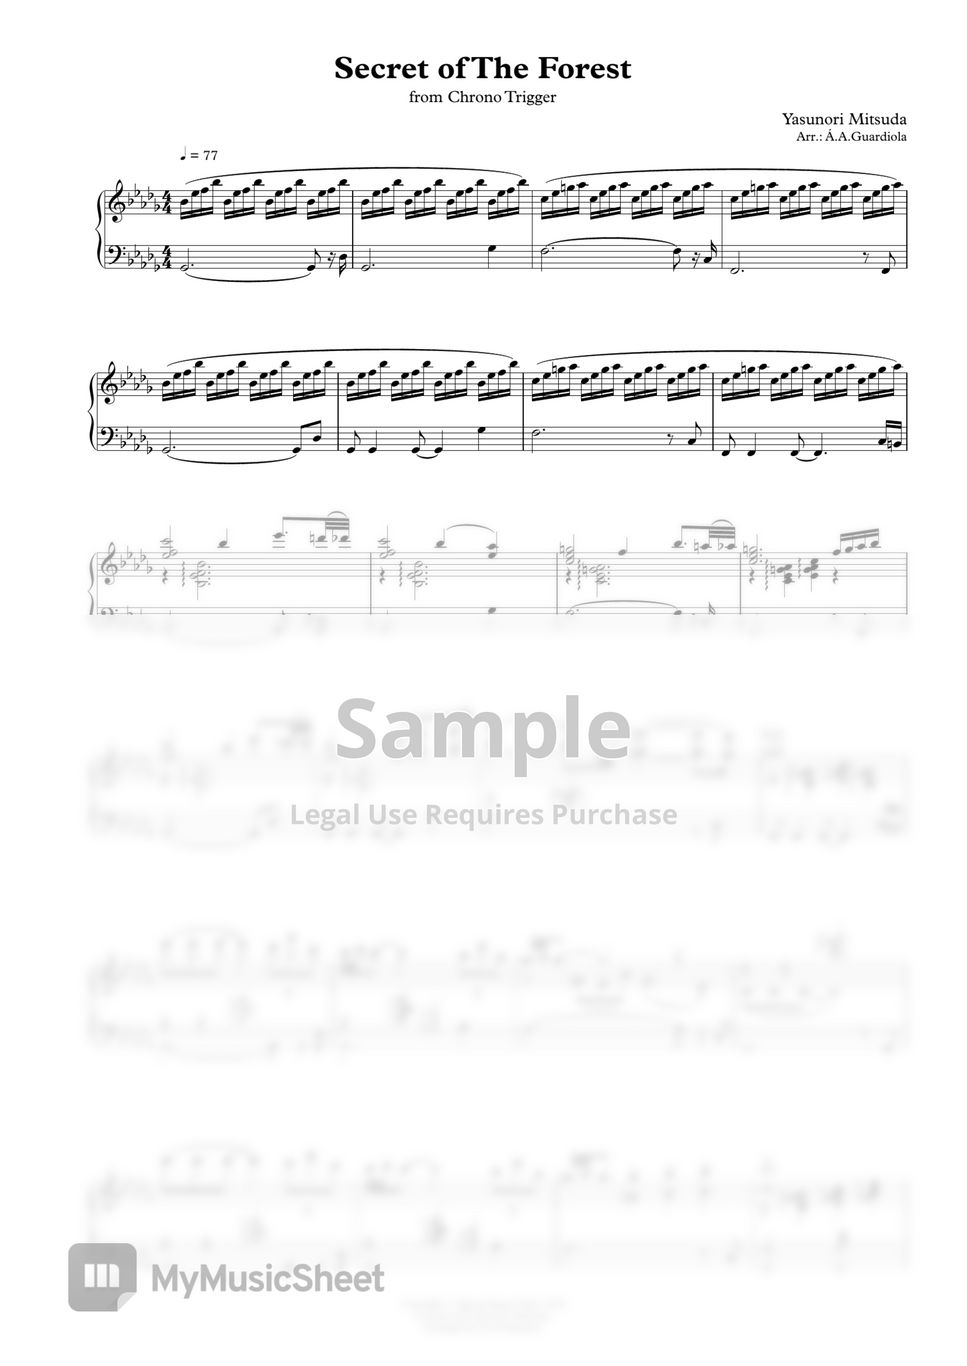 Yasunori Mitsuda - Secret of the Forest piano reduction (easy) by Á.A.Guardiola